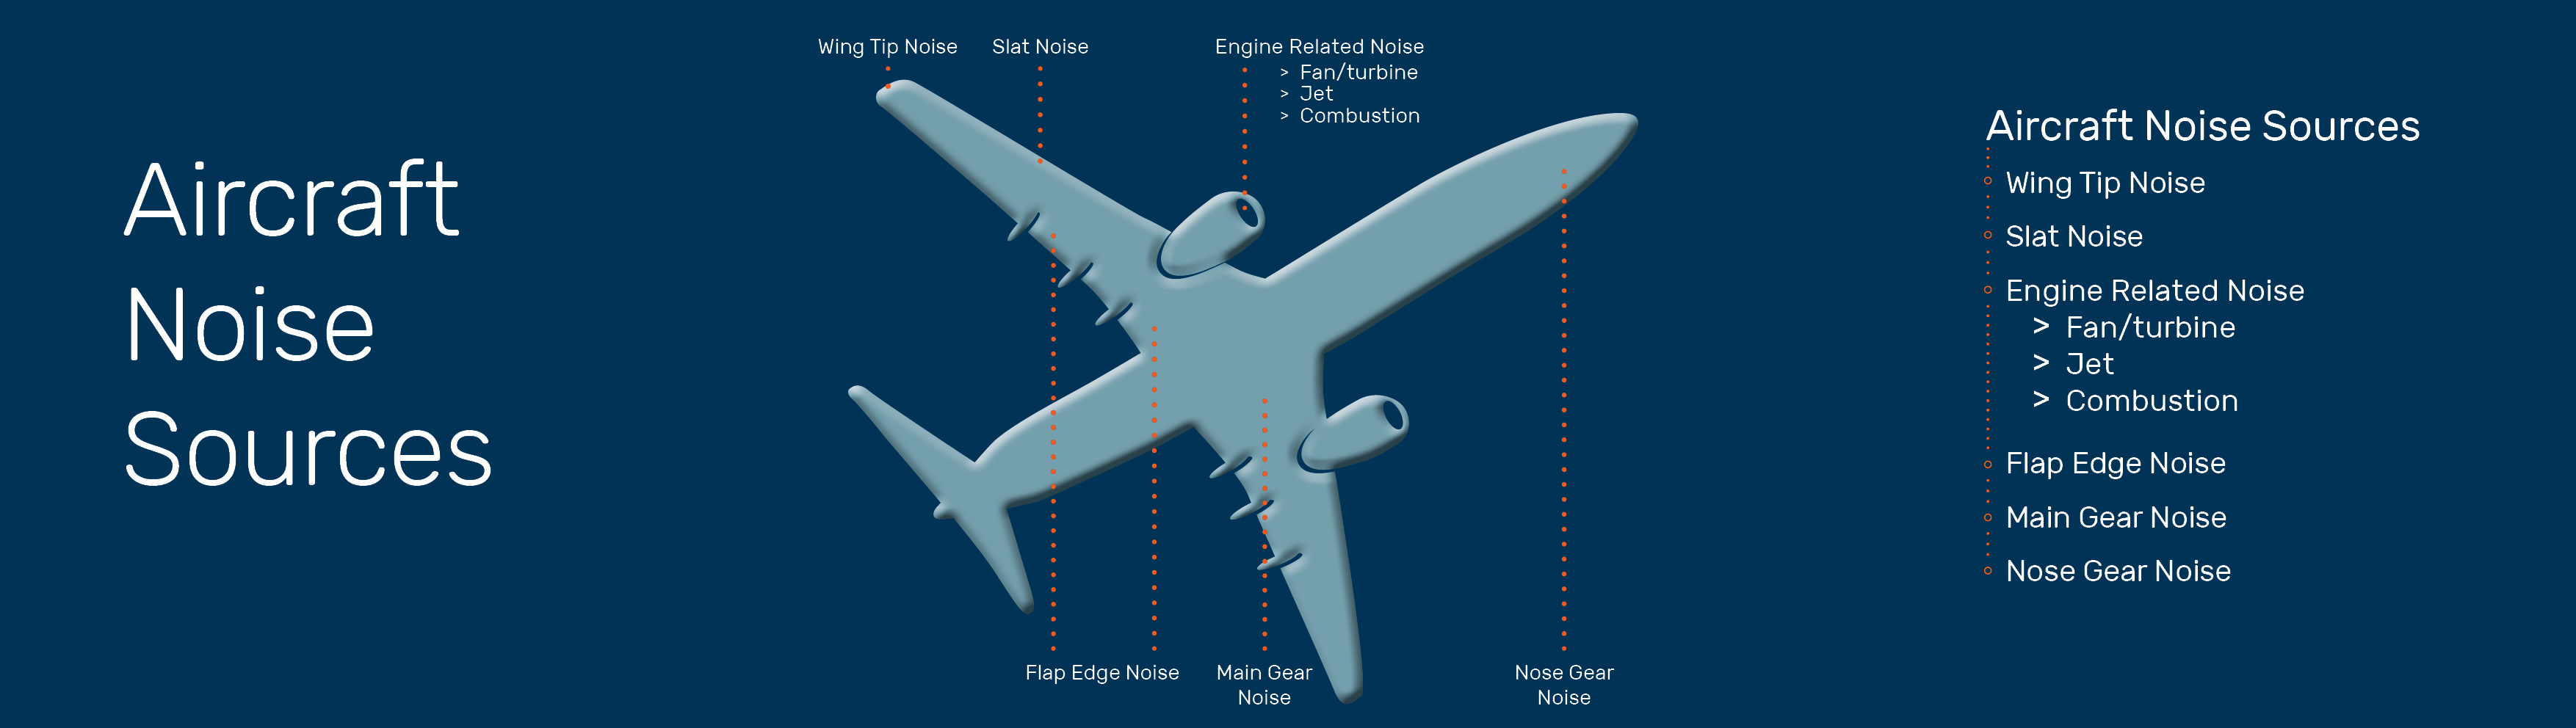 bred-aircraft-noise-sources-aero.jpg